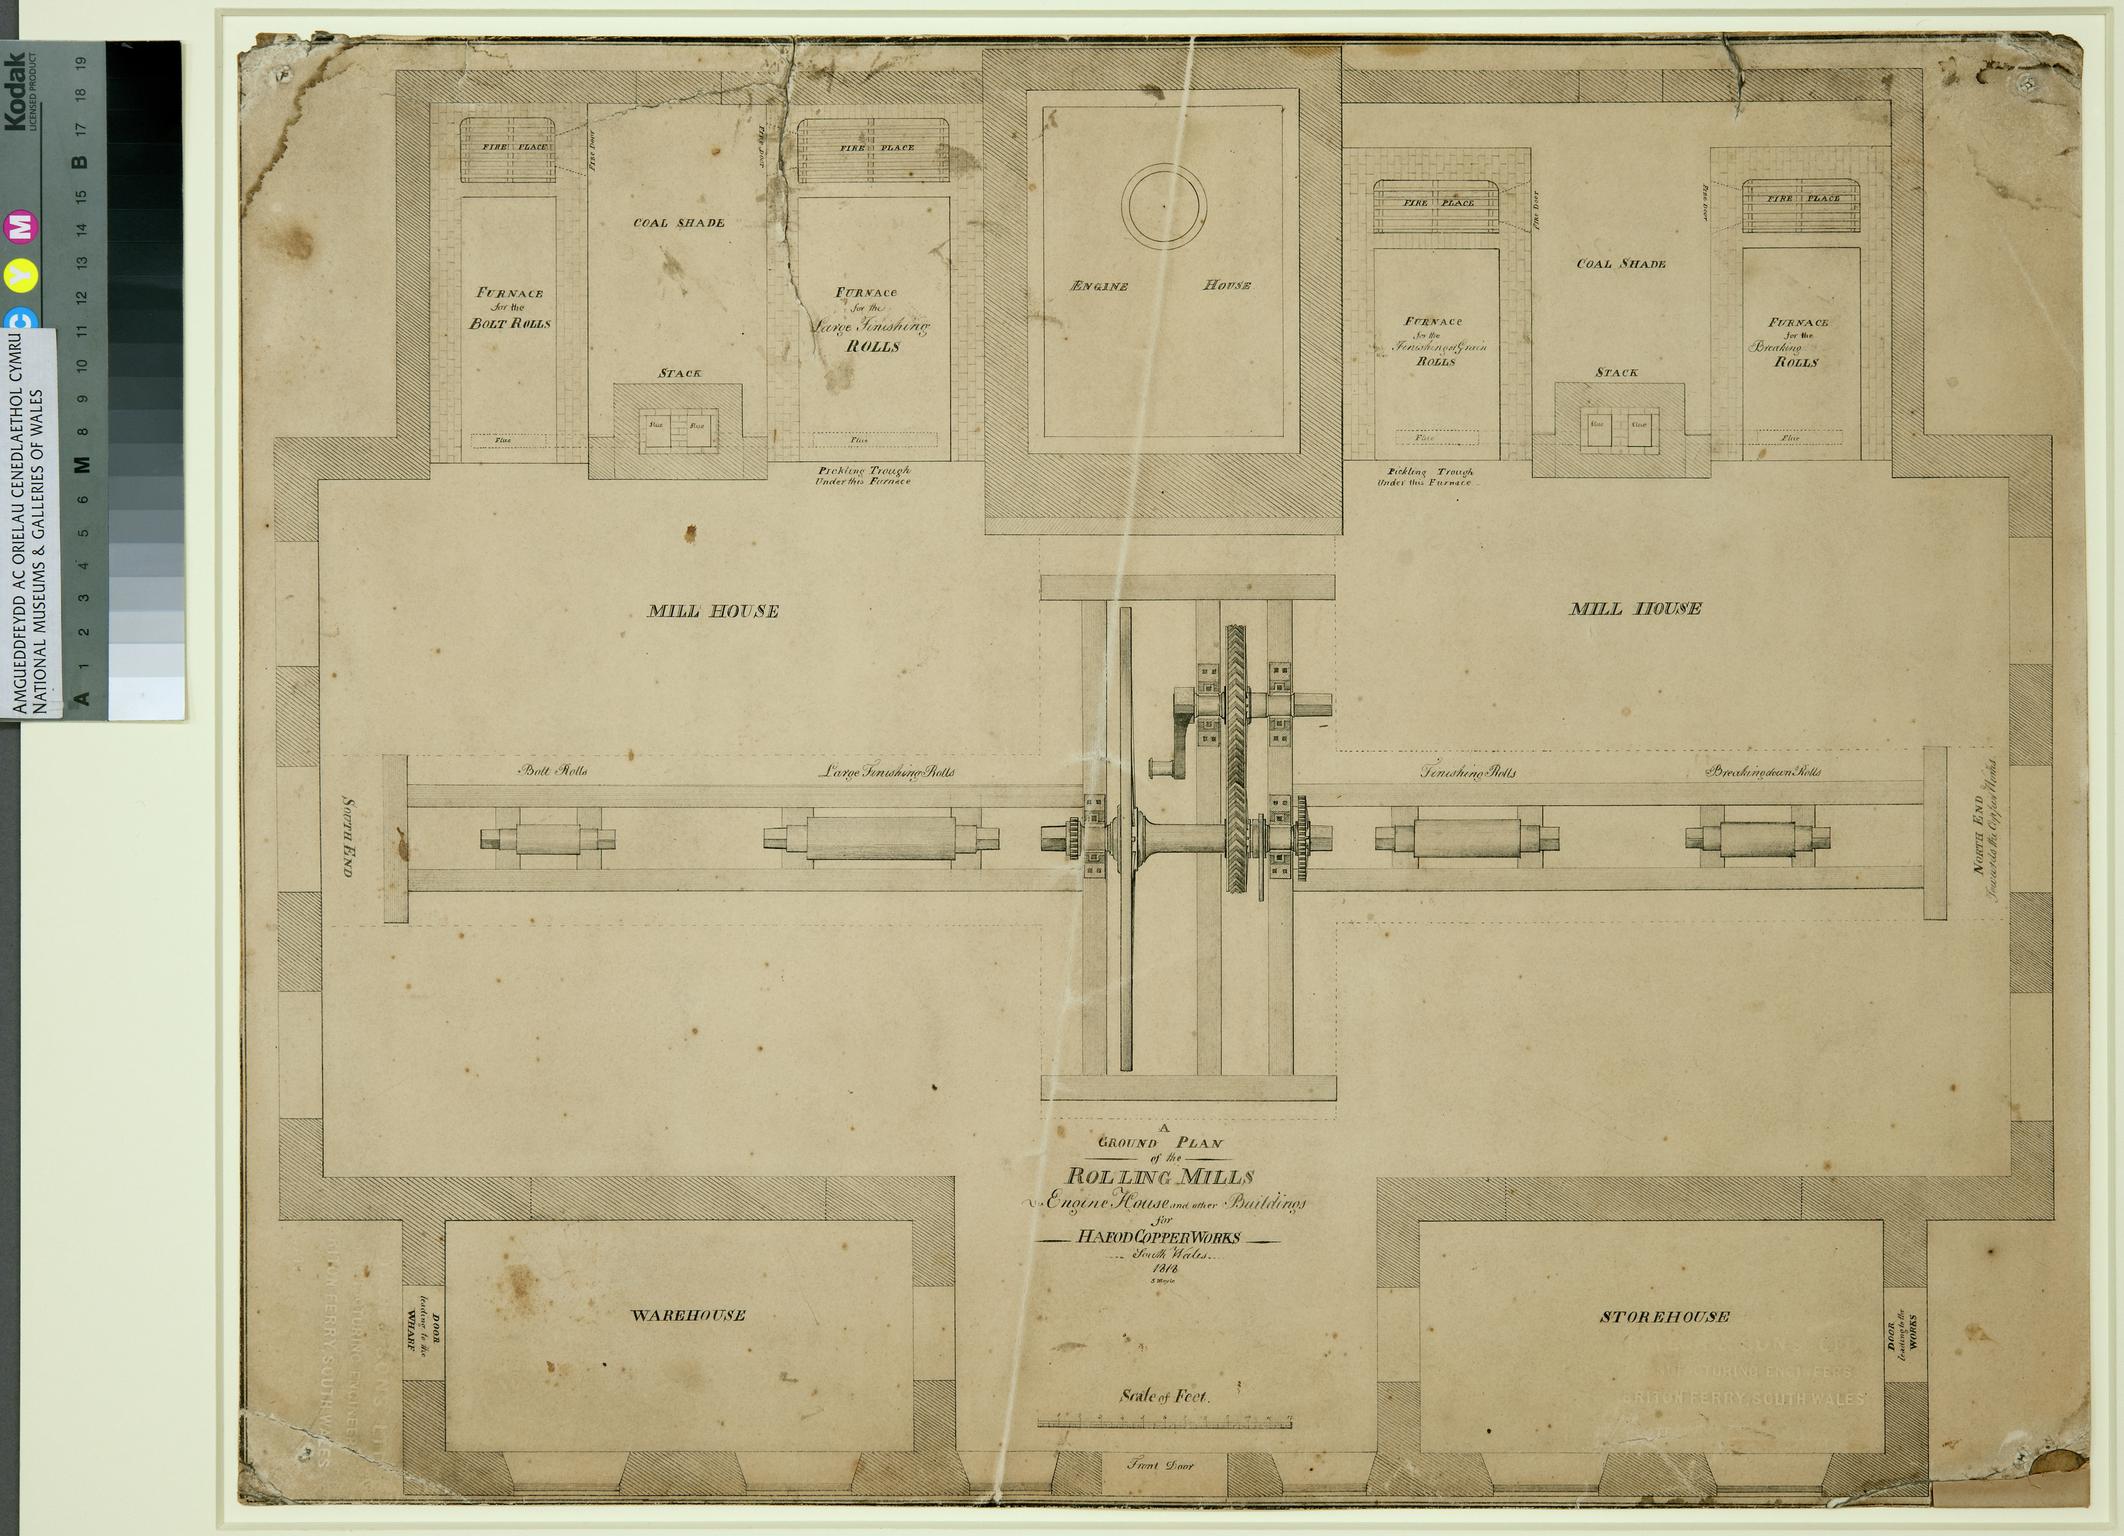 Hafod copper works plan, 1818